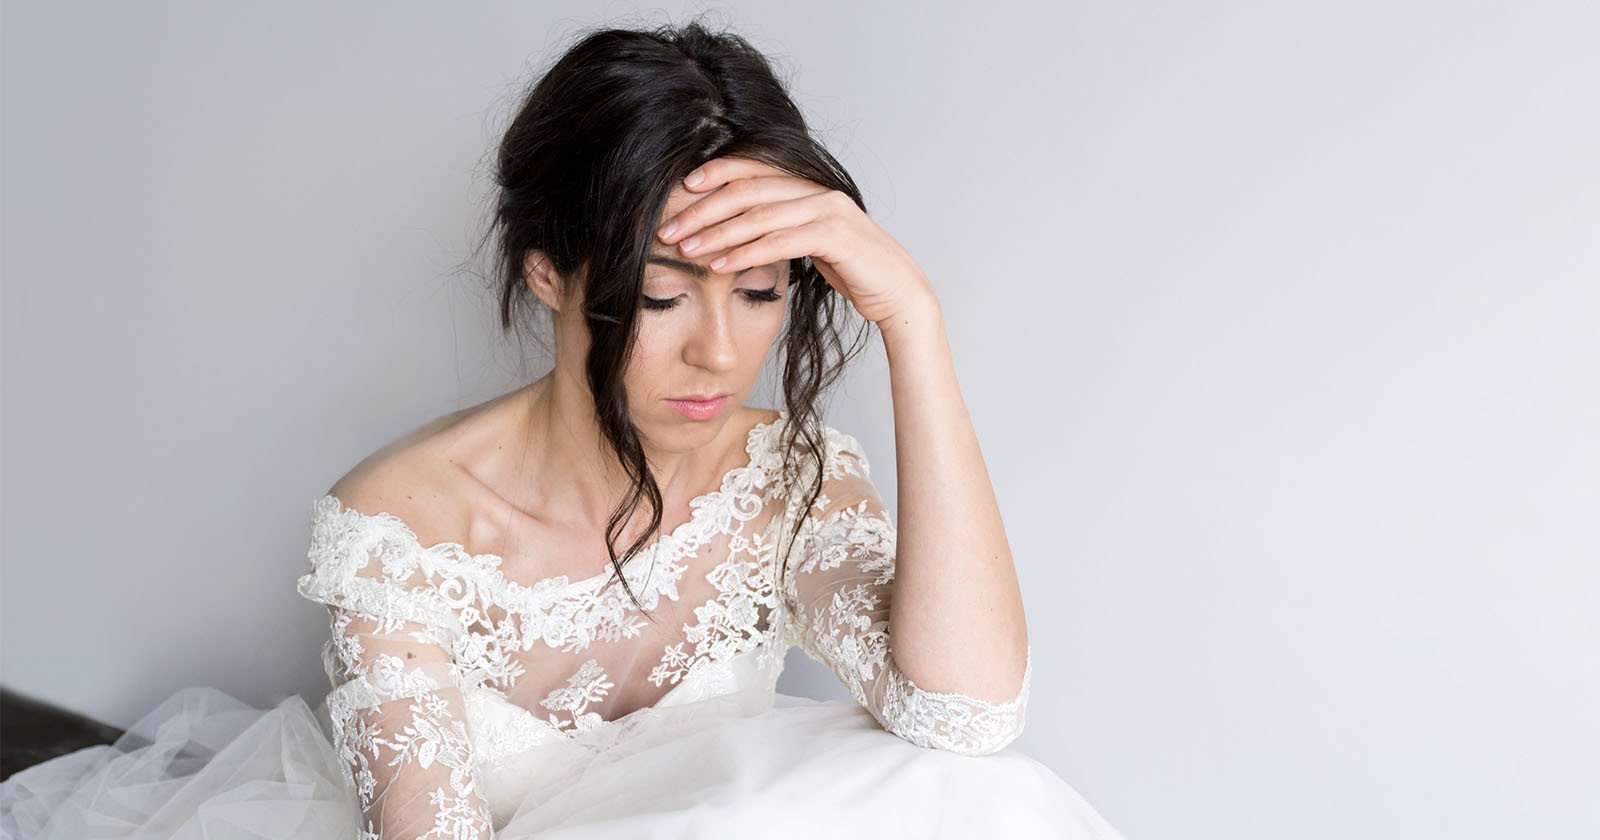  bridesmaid demoted unpaid photographer friend wedding 